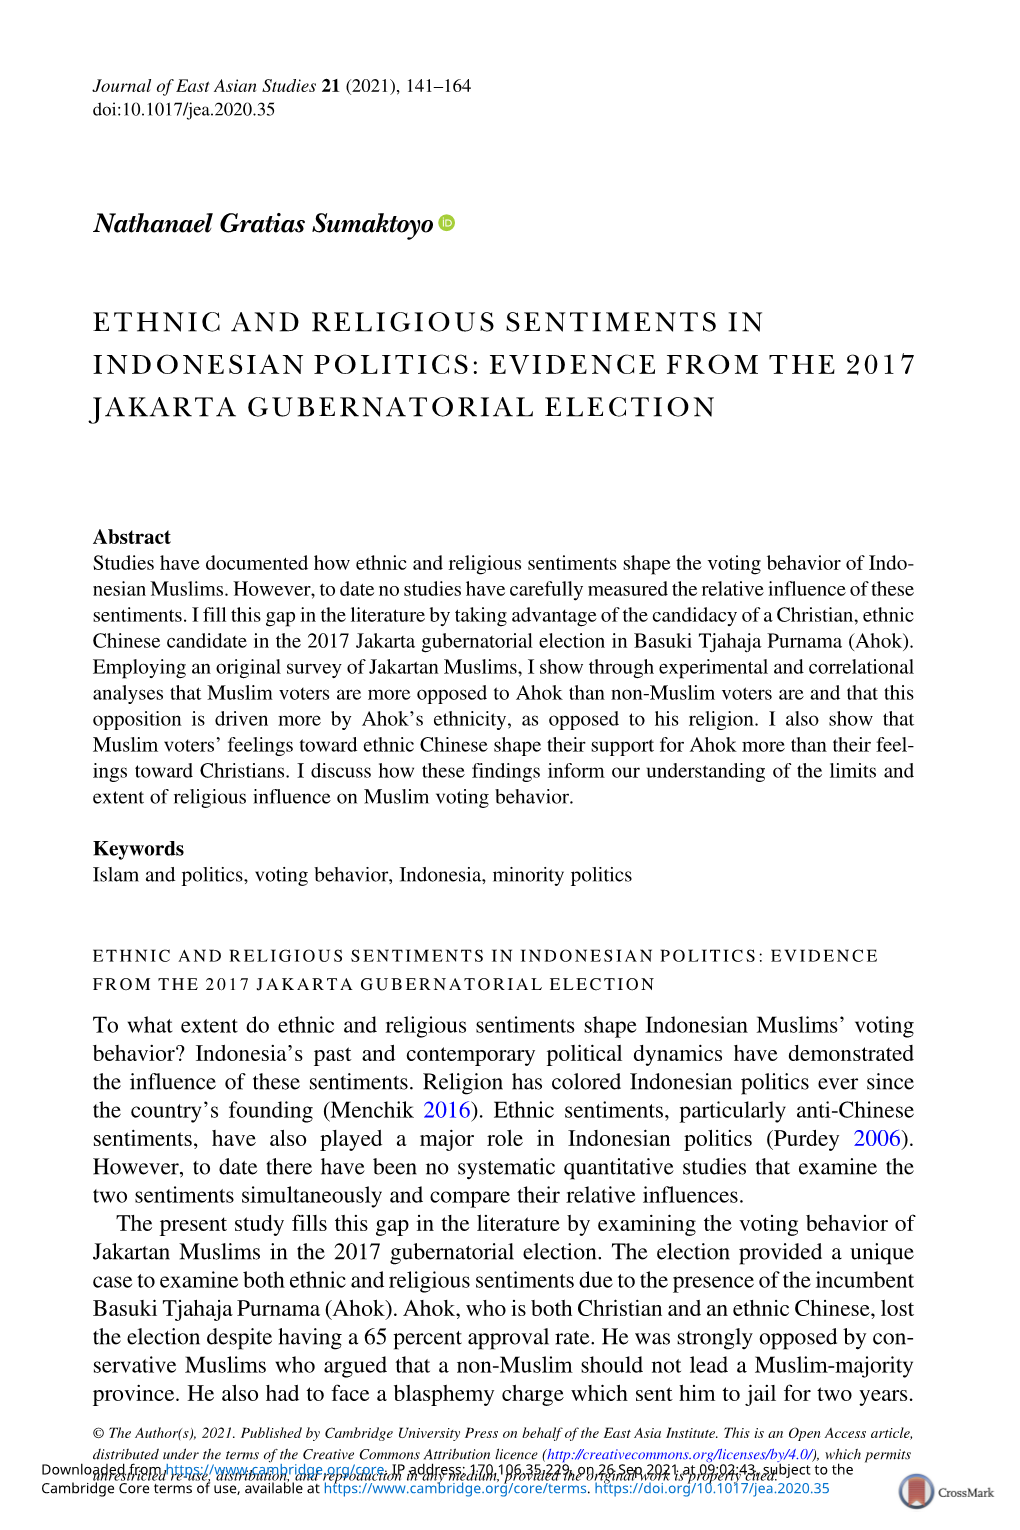 Nathanael Gratias Sumaktoyo ETHNIC and RELIGIOUS SENTIMENTS in INDONESIAN POLITICS: EVIDENCE from the 2017 JAKARTA GUBERNATORIAL